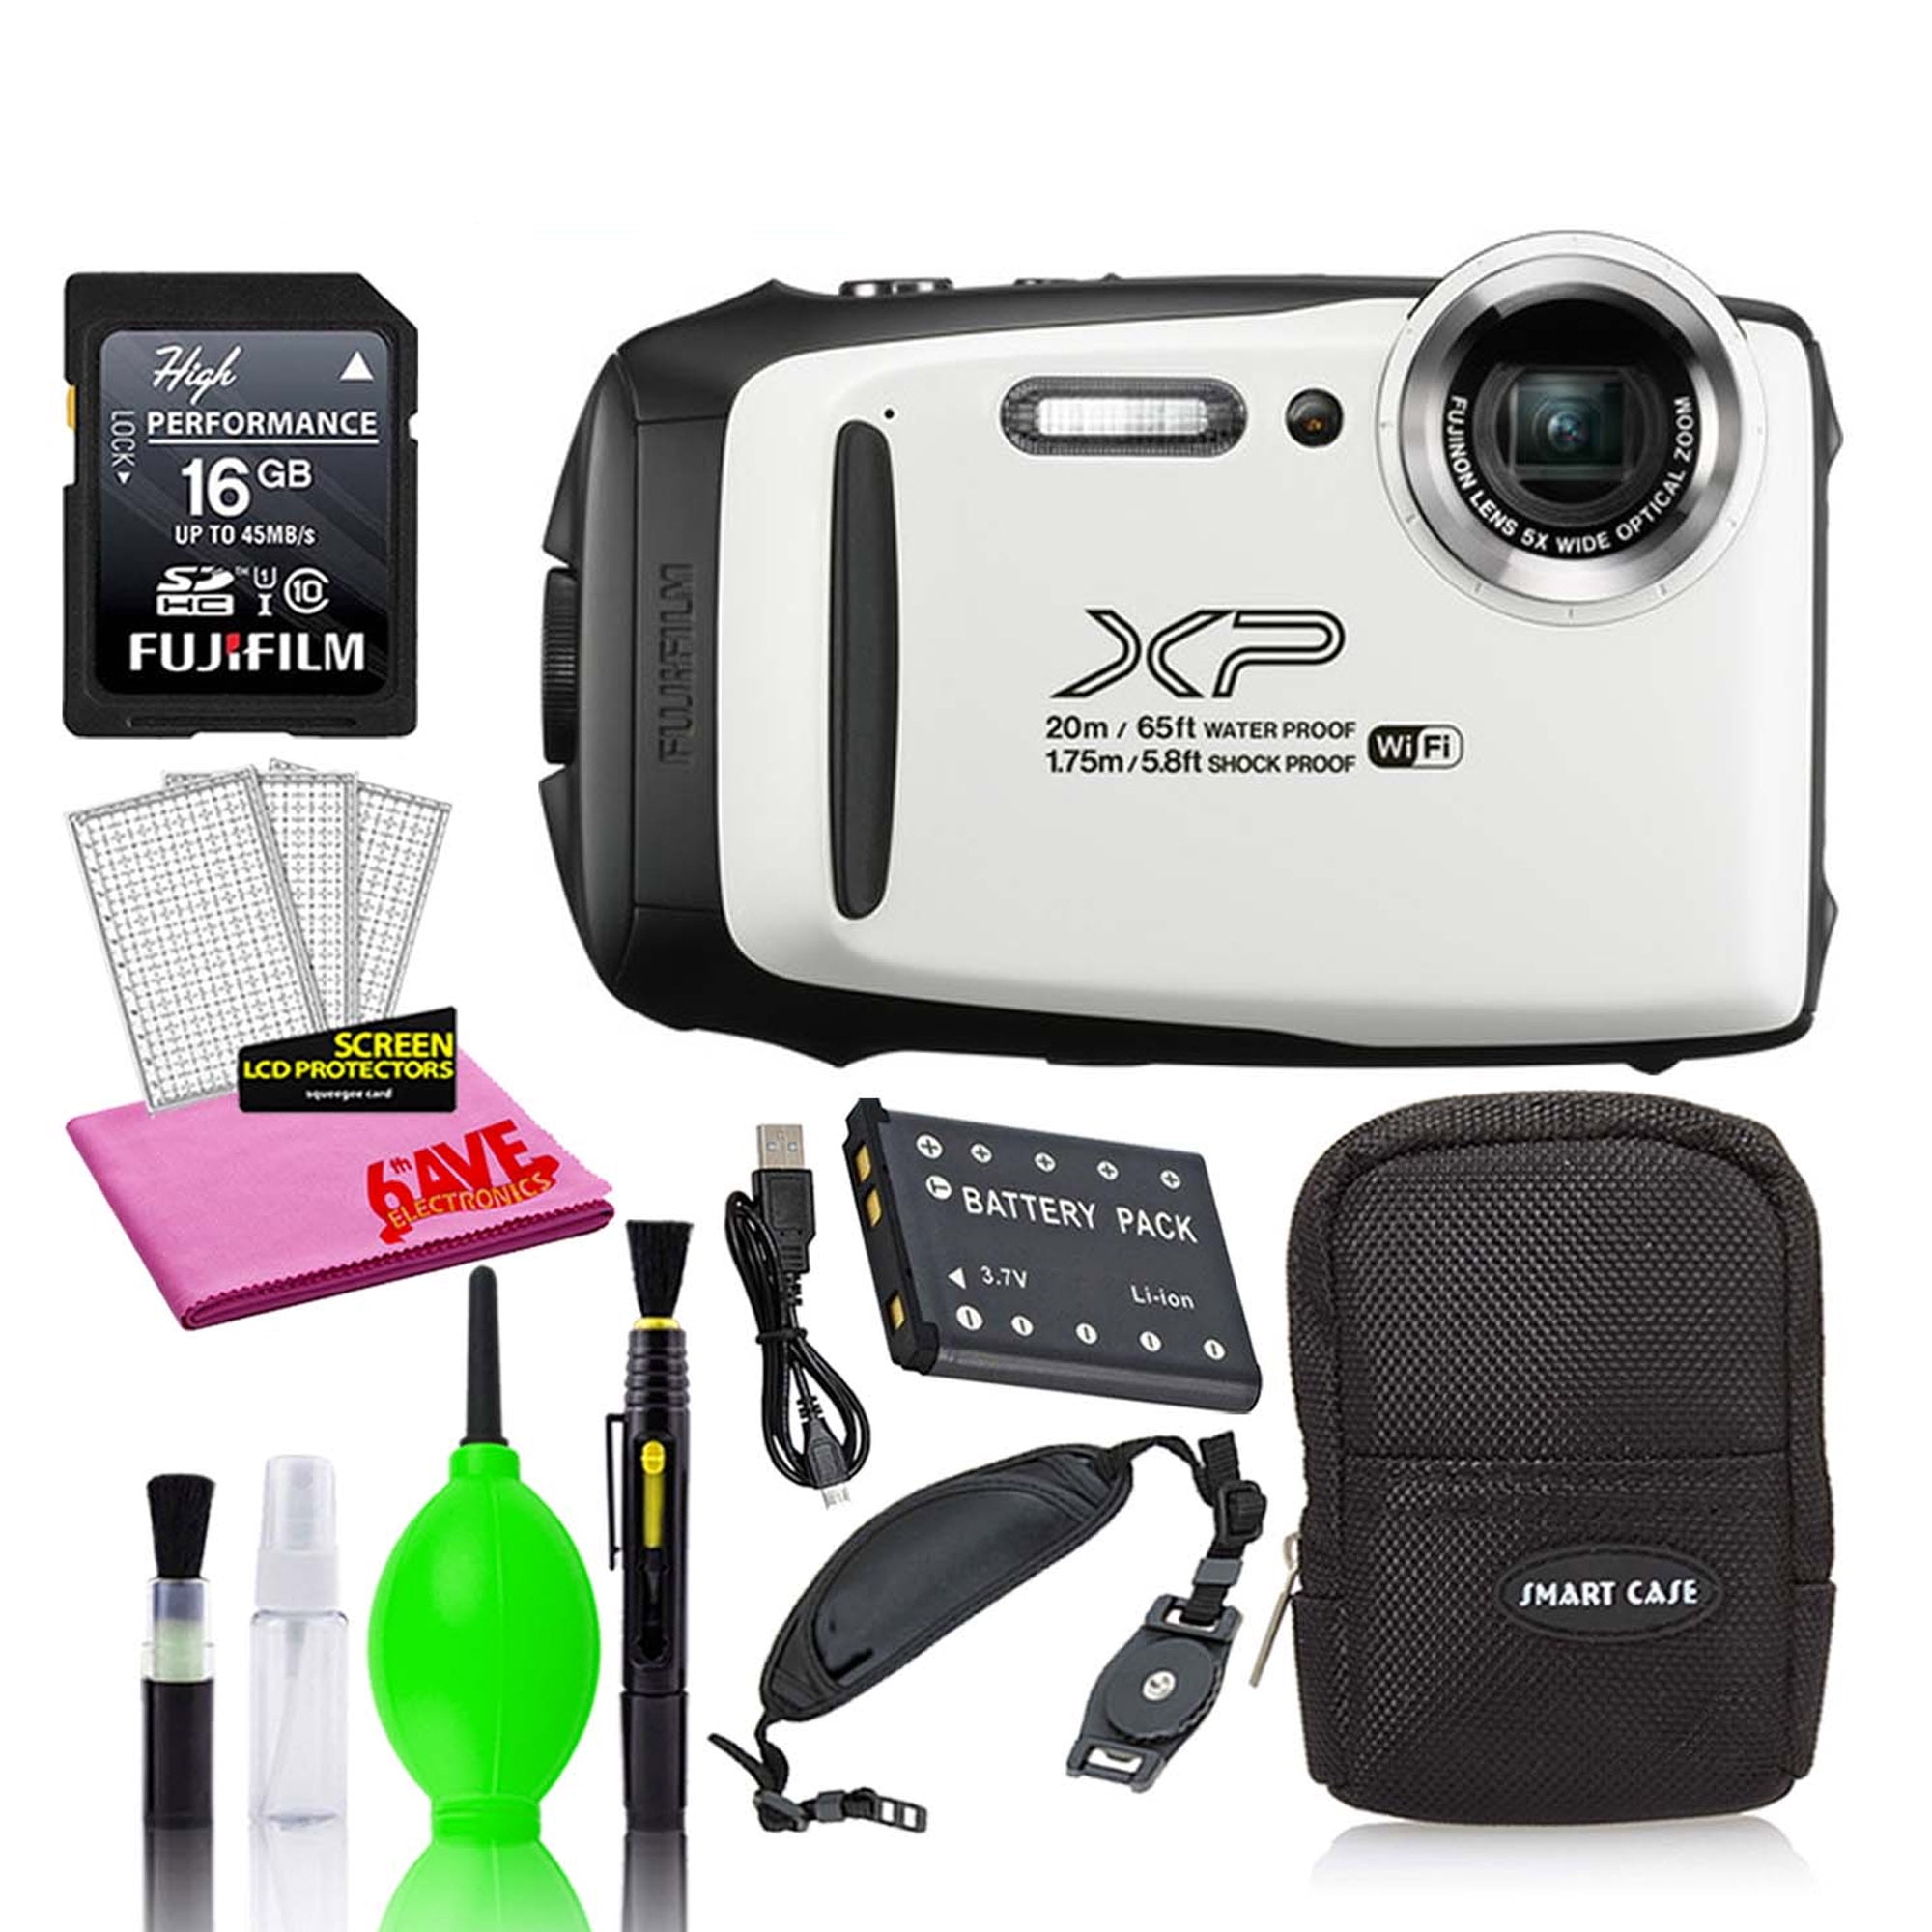 Fujifilm FinePix XP130 Waterproof Digital Camera (White) with 16GB